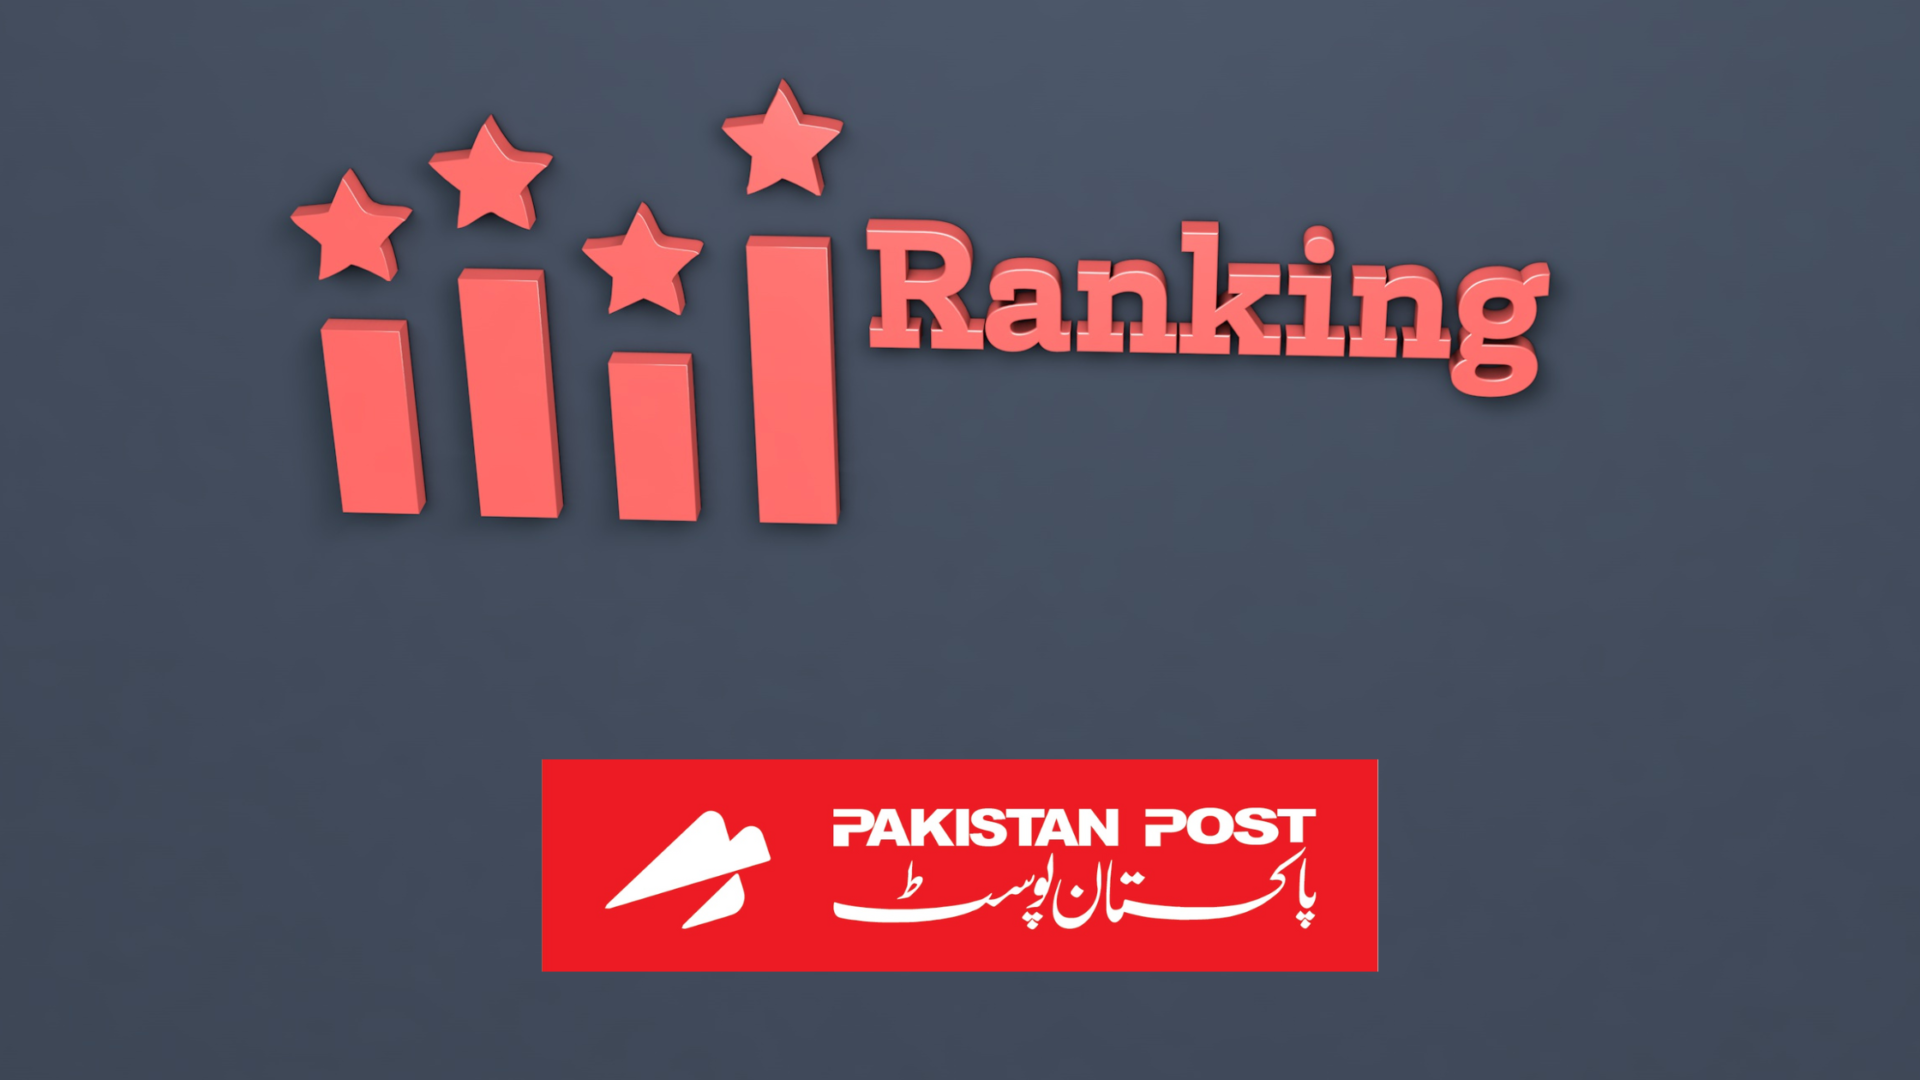 Pakistan Post UPU Ranking